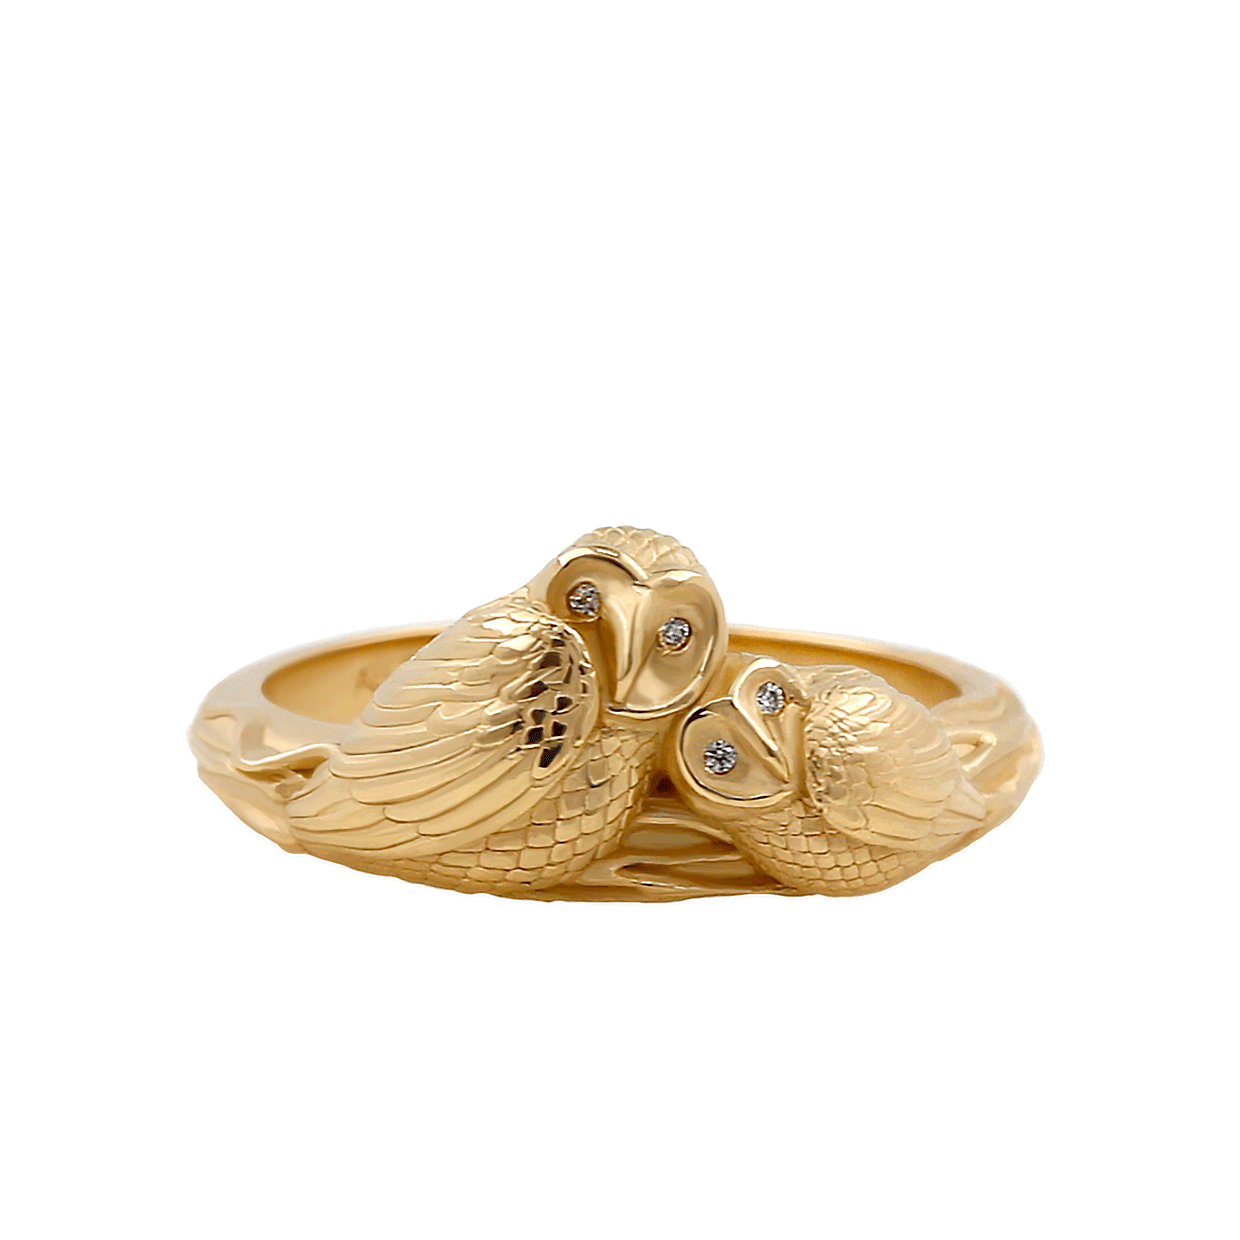 Gold Ring “OWL” - Manuel Carrera Cordon